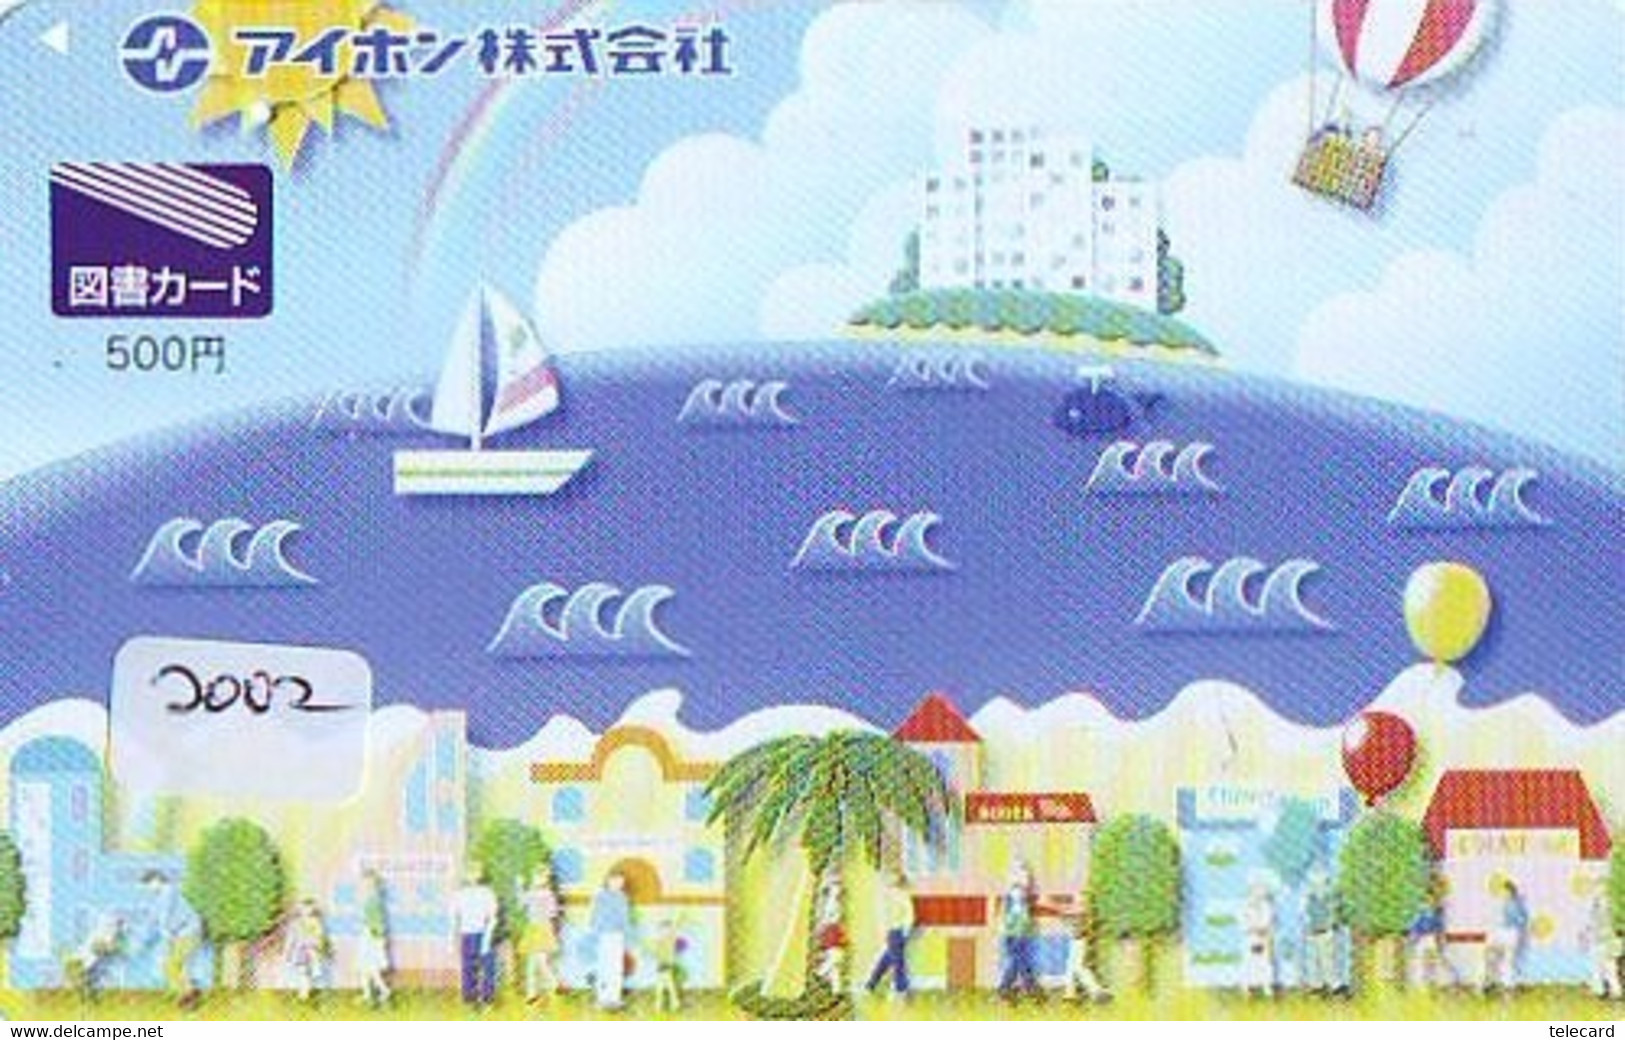 Telecarte JAPON * (2002) BALLON * MONTGOLFIERE - Hot Air Balloon * Aerostato * Heißluft PHONECARD JAPAN - - Sport